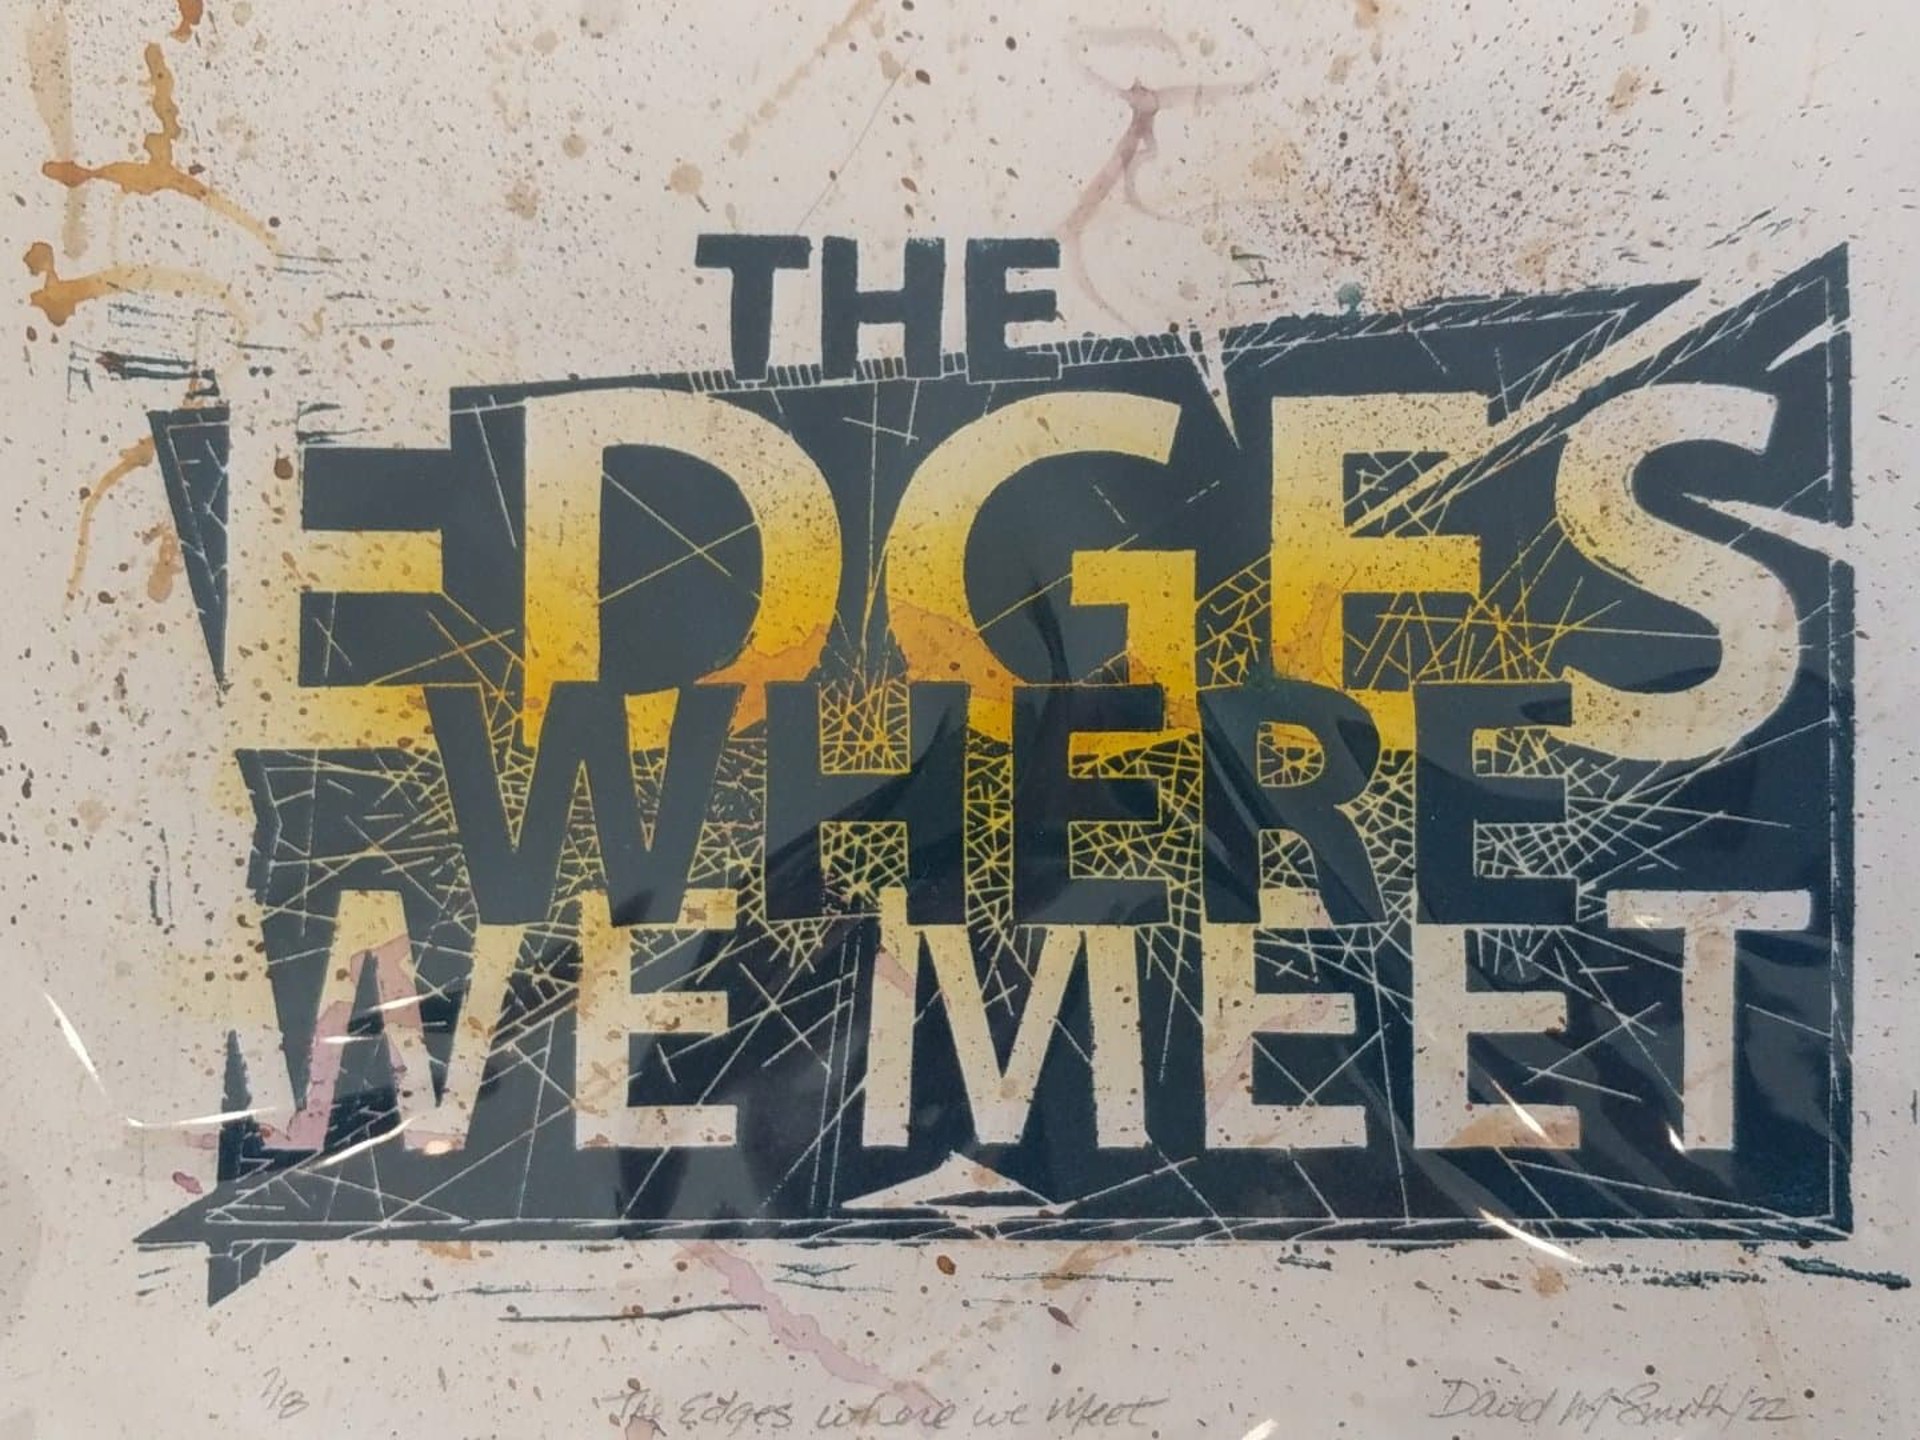 Edges Where We Meet by David M. Smith